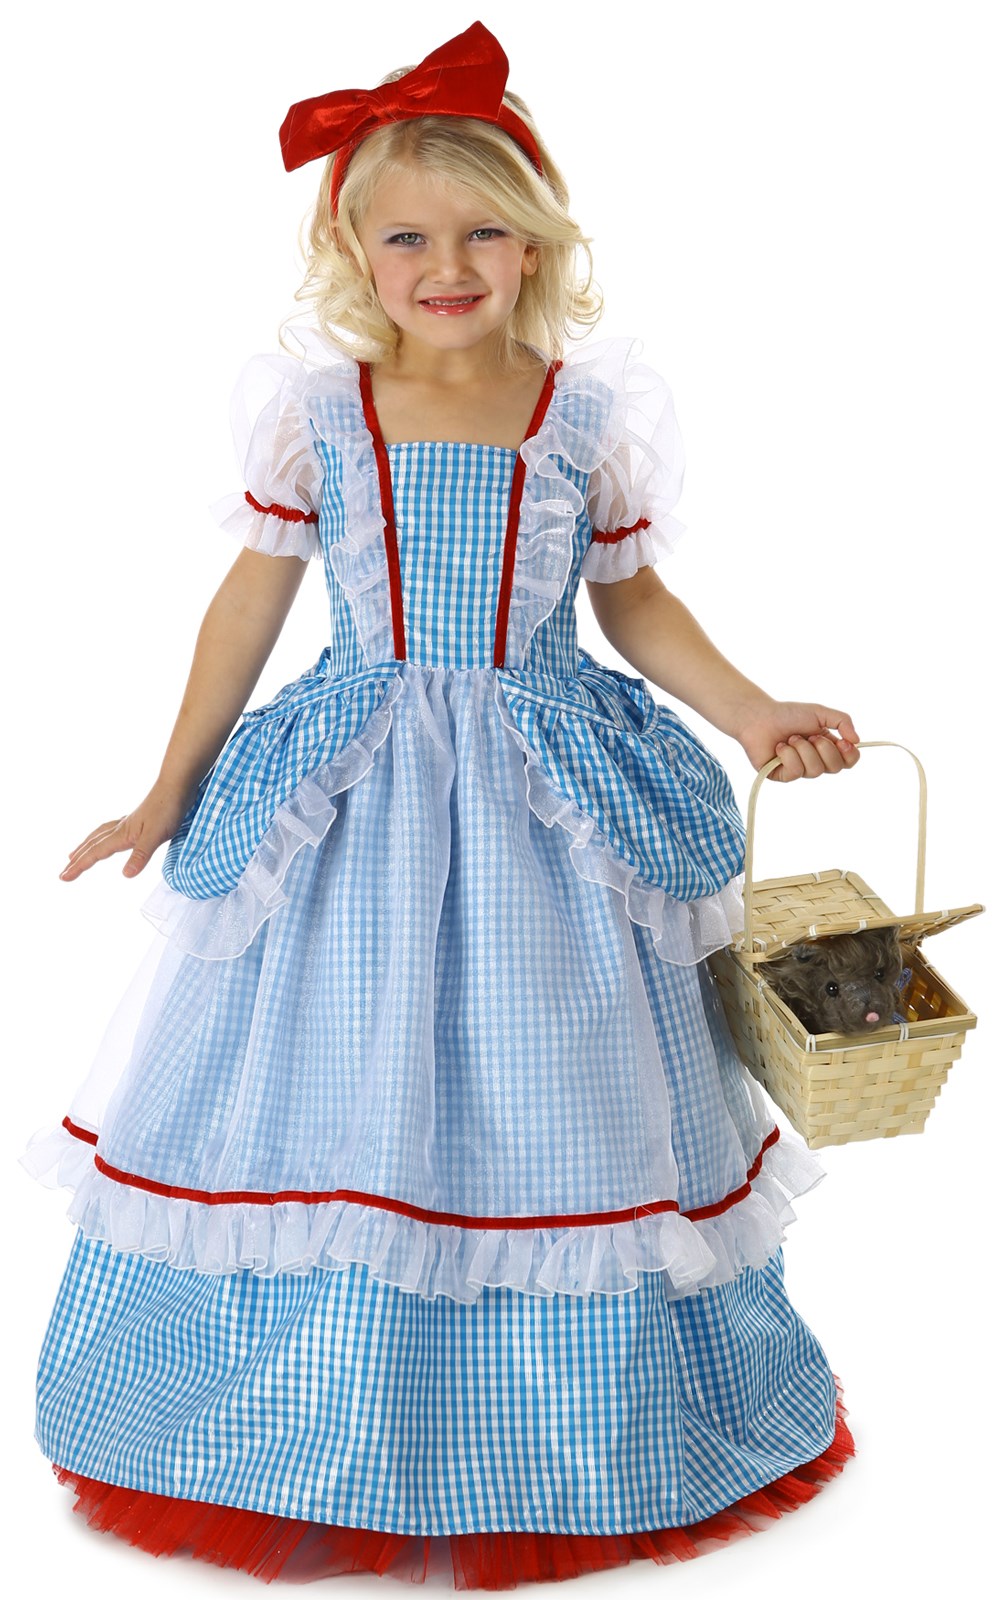 Wizard of Oz Pocket Deluxe Dorothy Costume